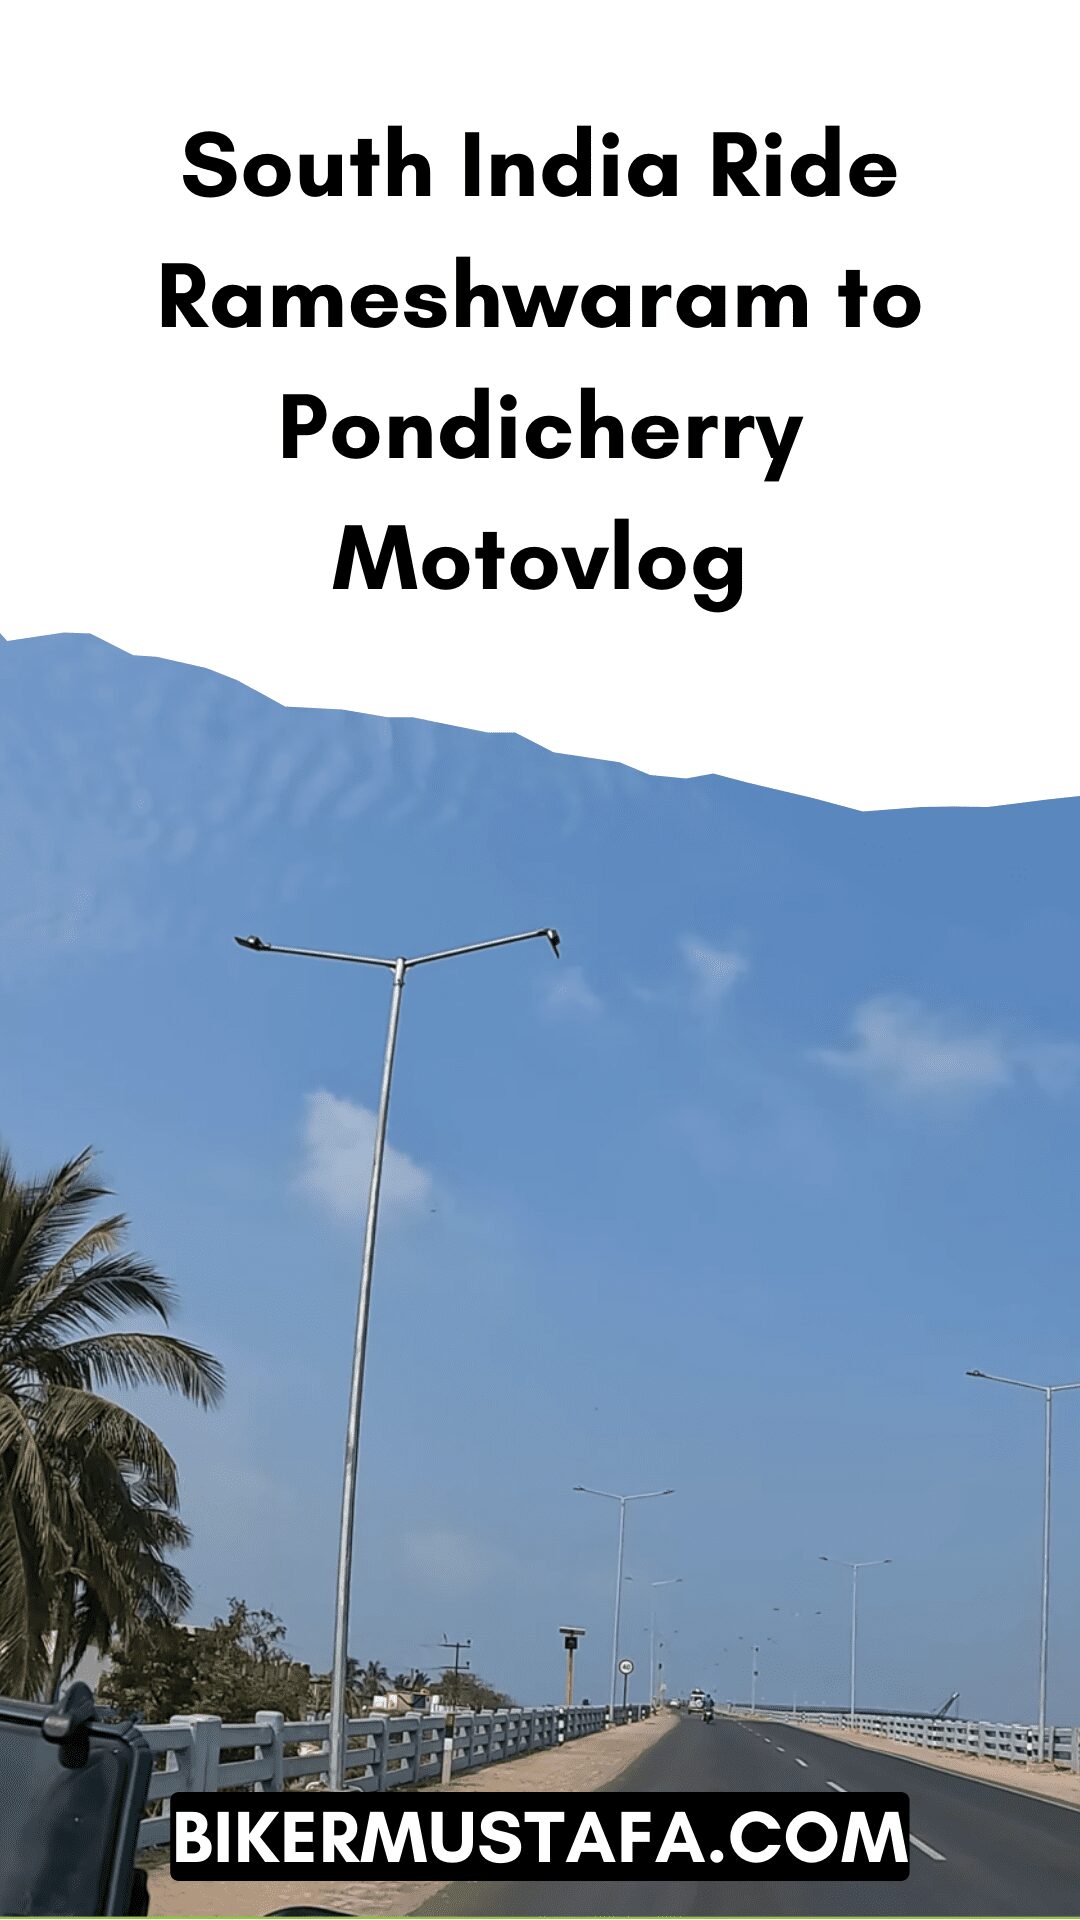 South India Ride Rameshwaram to Pondicherry Motovlog